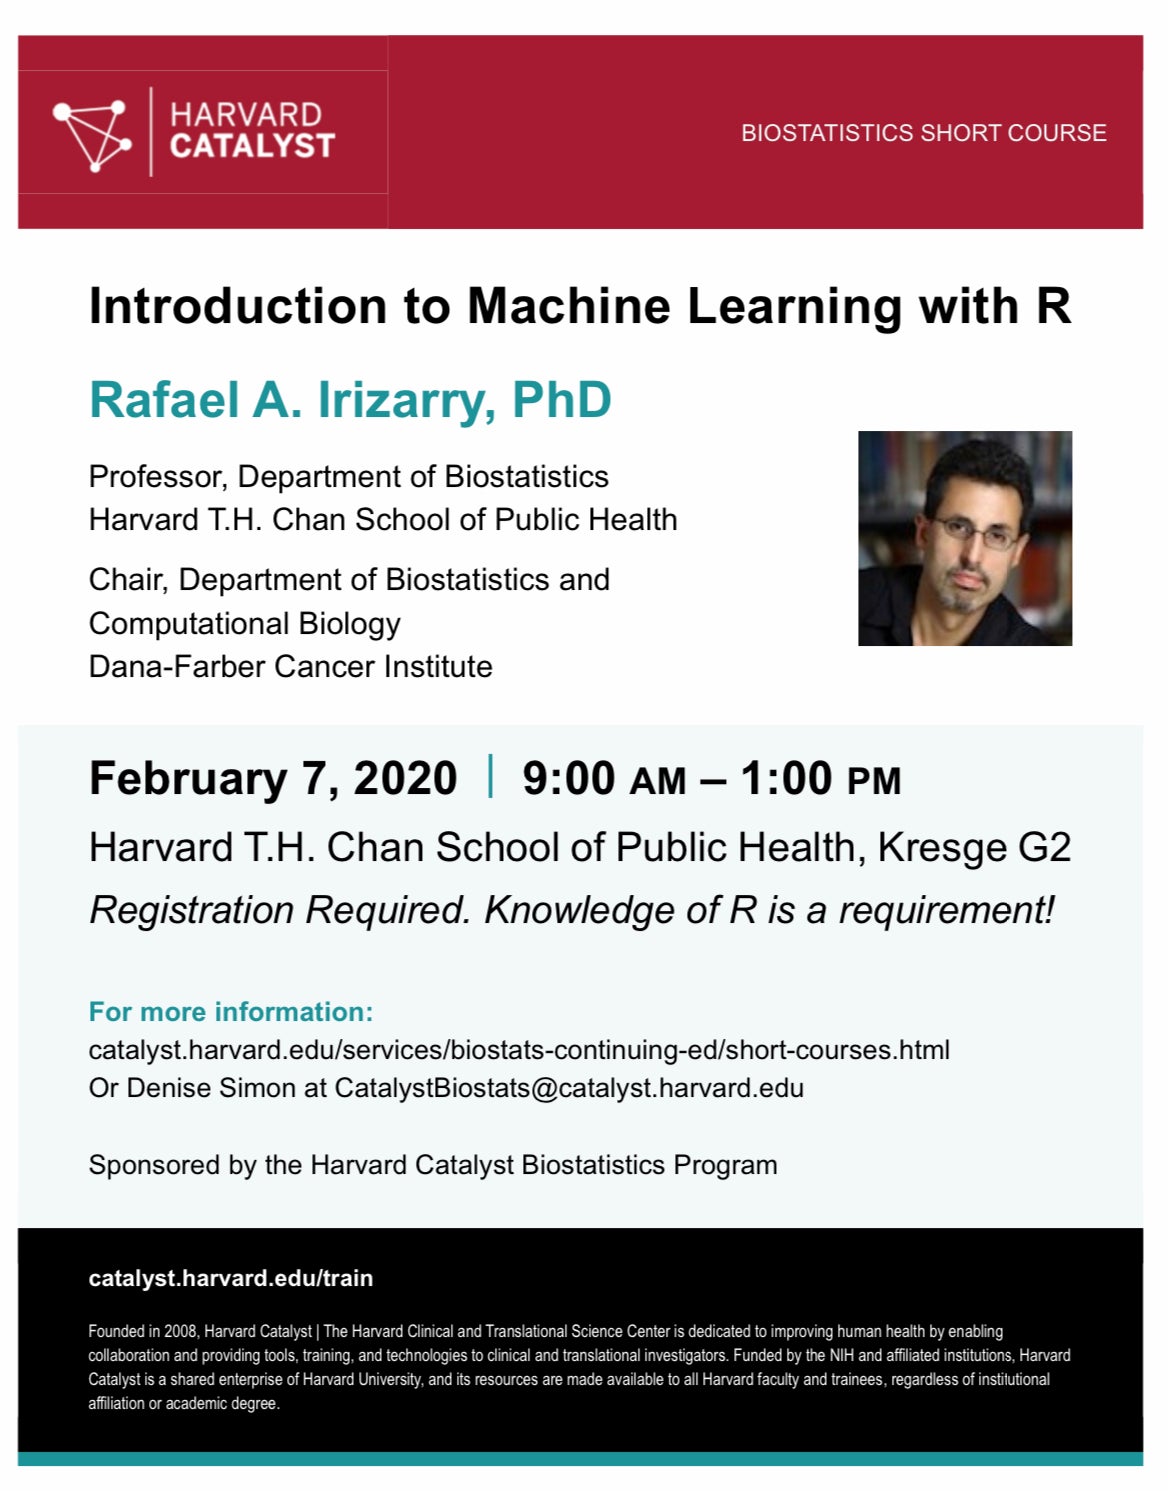 Machine Learning with Rafael Irizarry